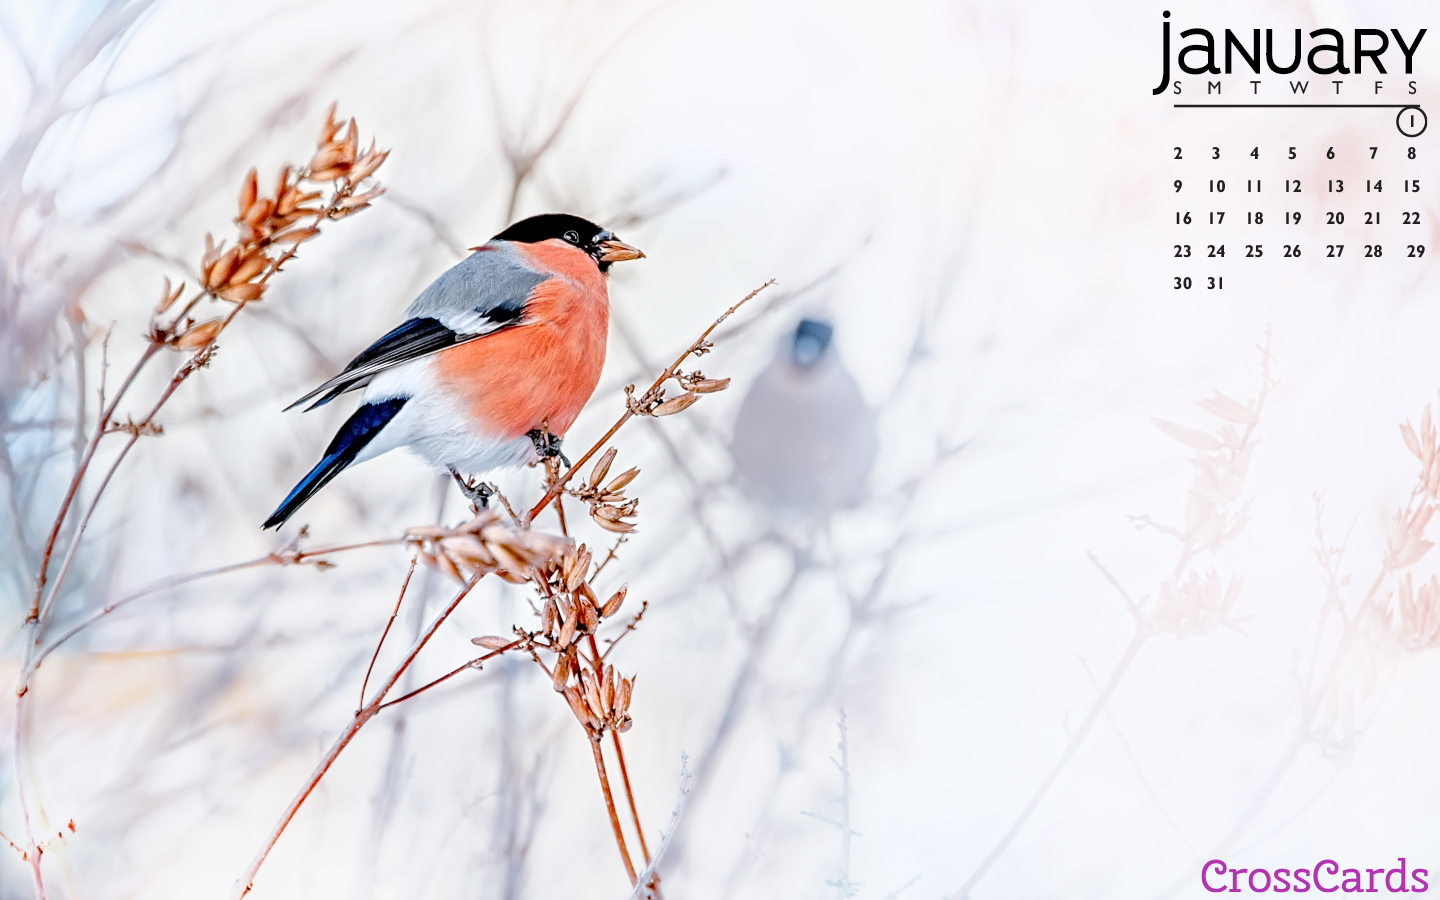 January 2022 - Winter Birds mobile phone wallpaper